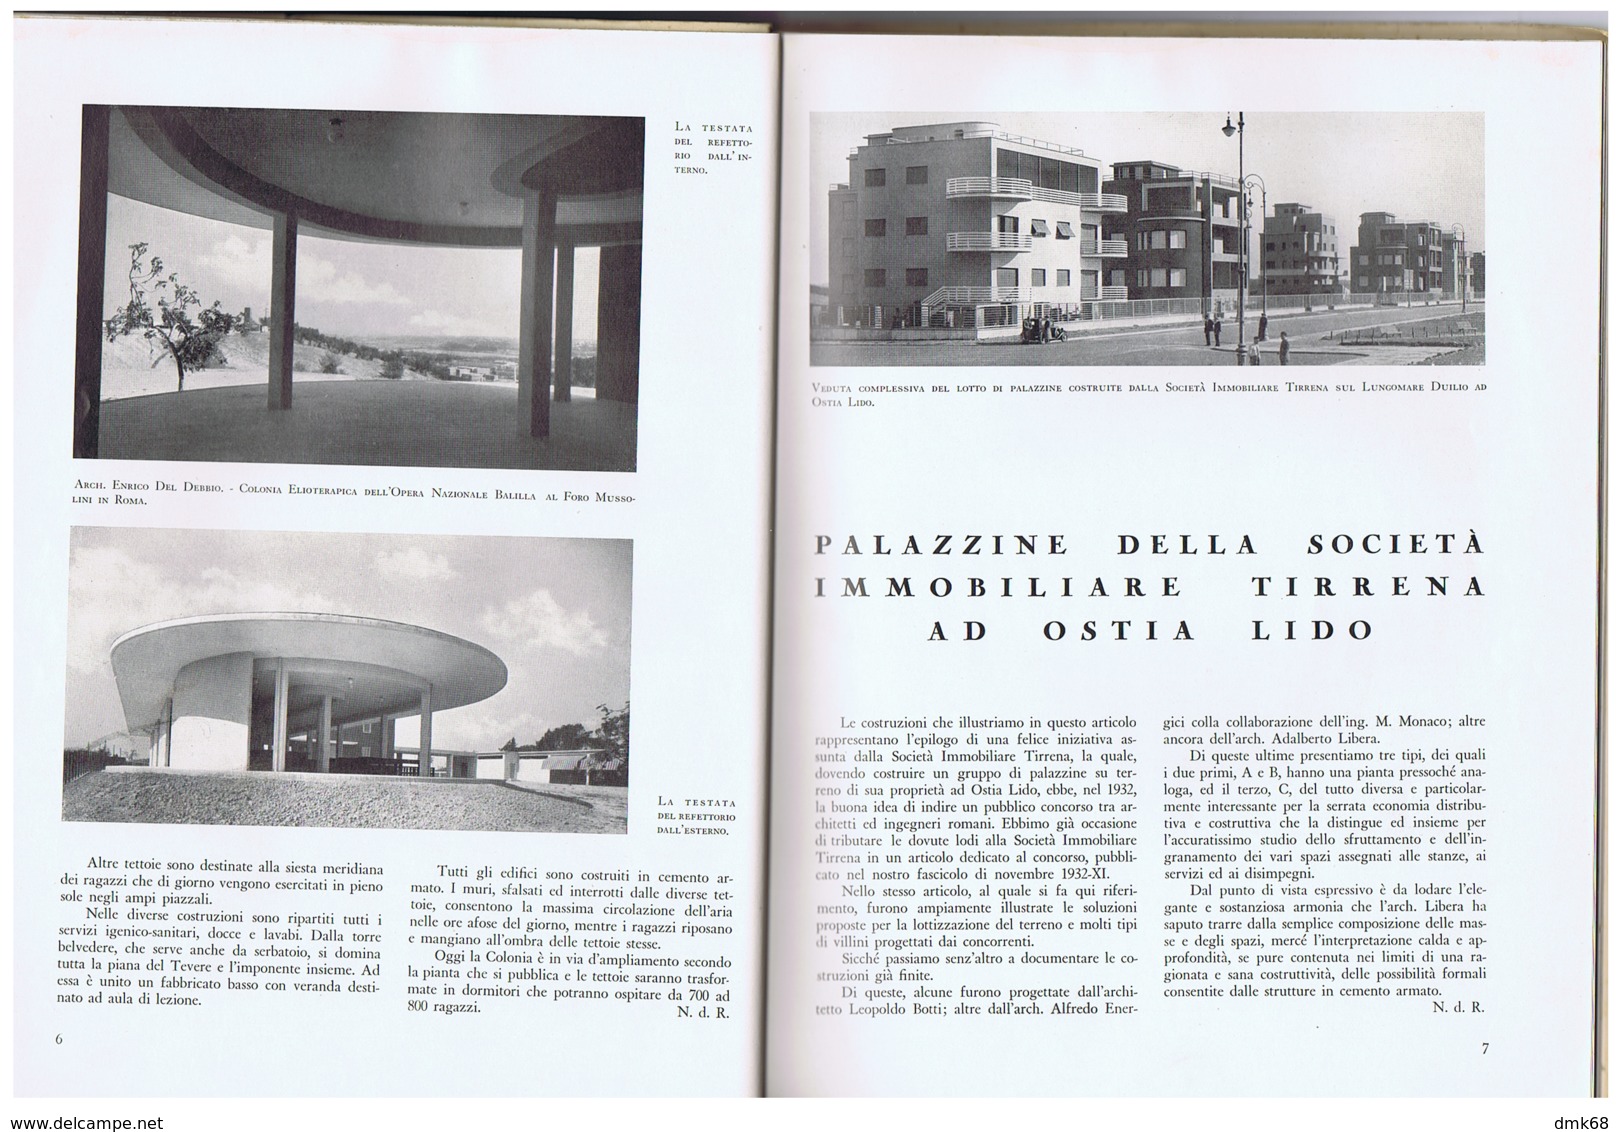 ARCHITETTURA / FASCISMO - MASSIMO PIACENTINI - 1935 - ROMA / RICCIONE / BARI / VENEZIA / PIACENZA / MOGADISCIO - Art, Design, Decoration